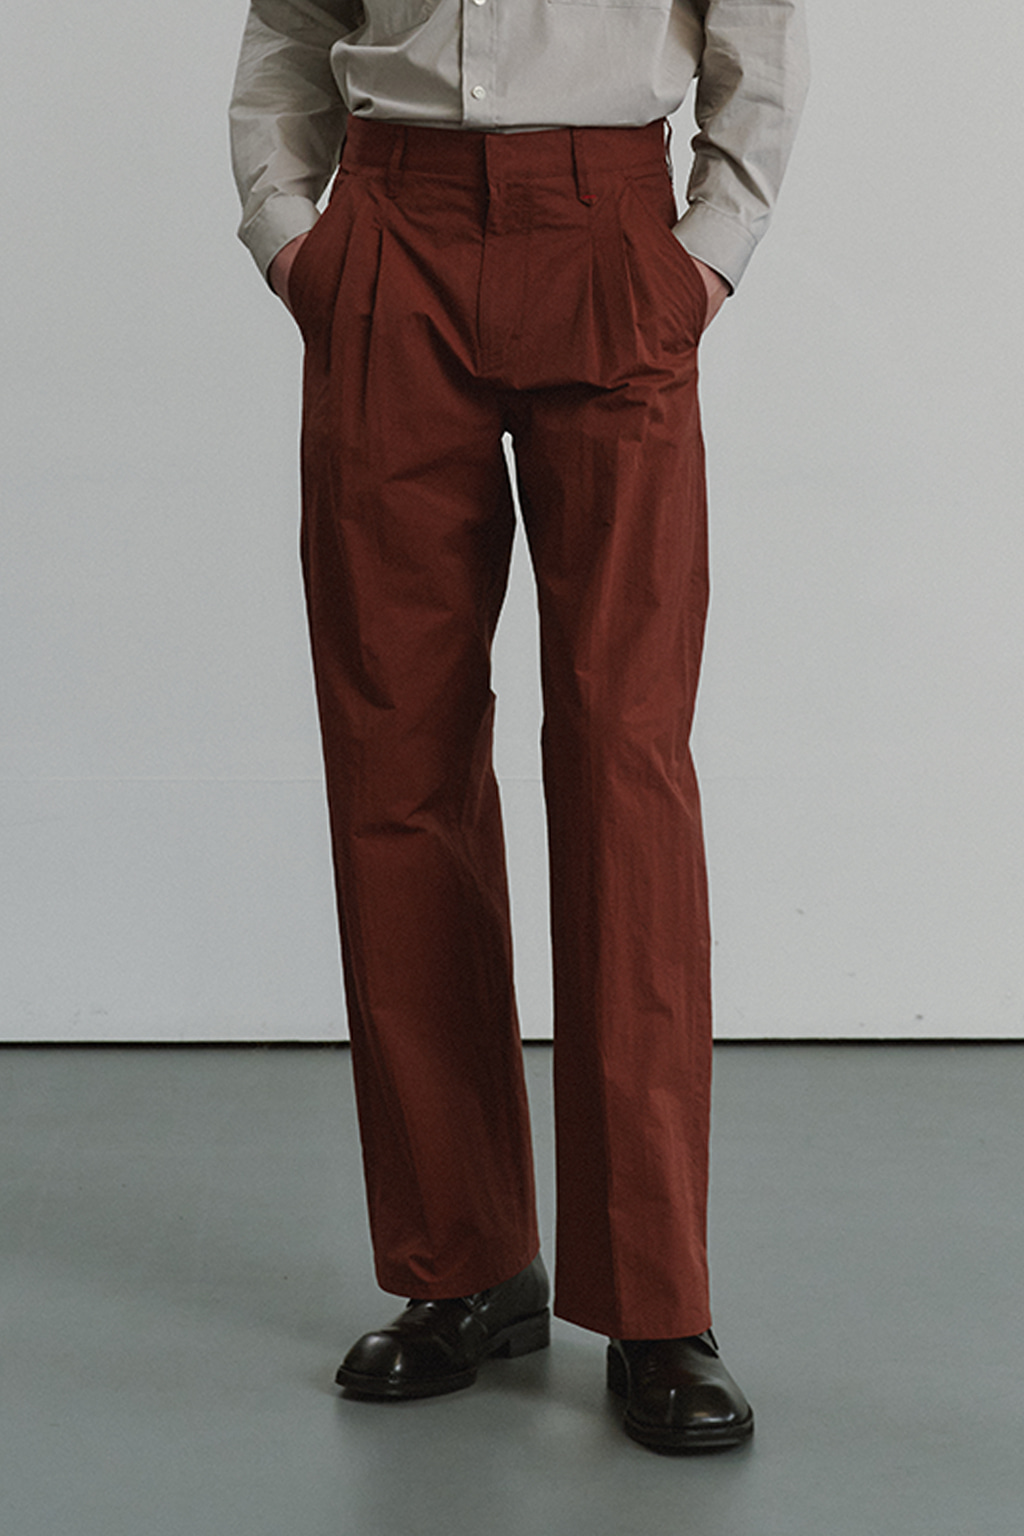 Nylon Crease Line Pants (Brown)